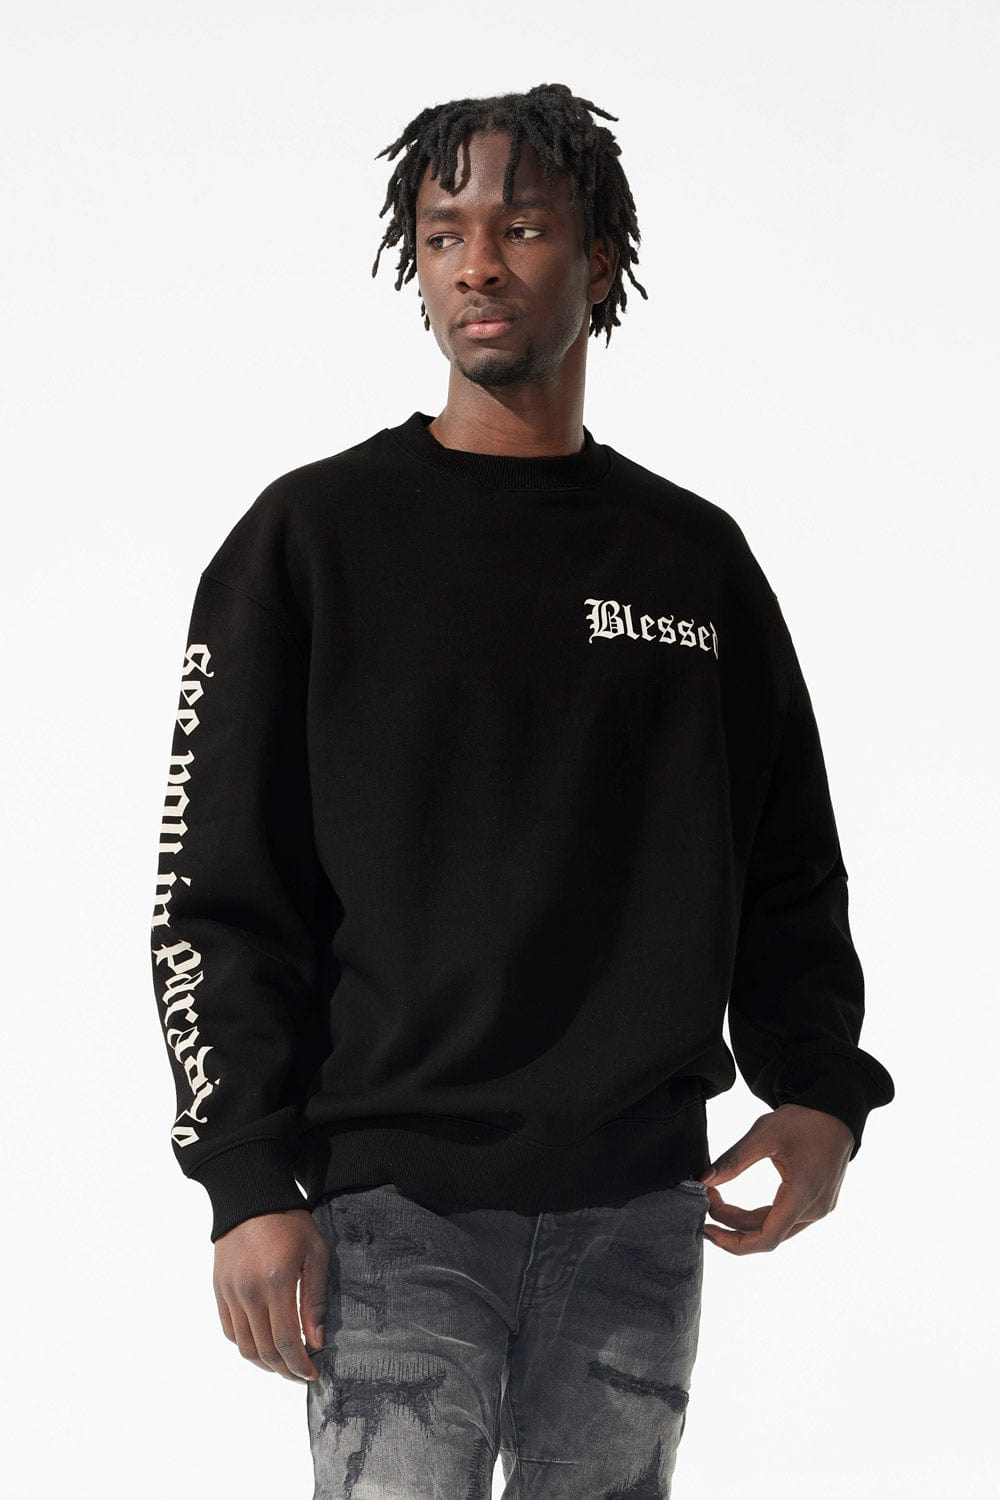 Jordan Craig Blessed Crewneck Sweatshirt (Black)